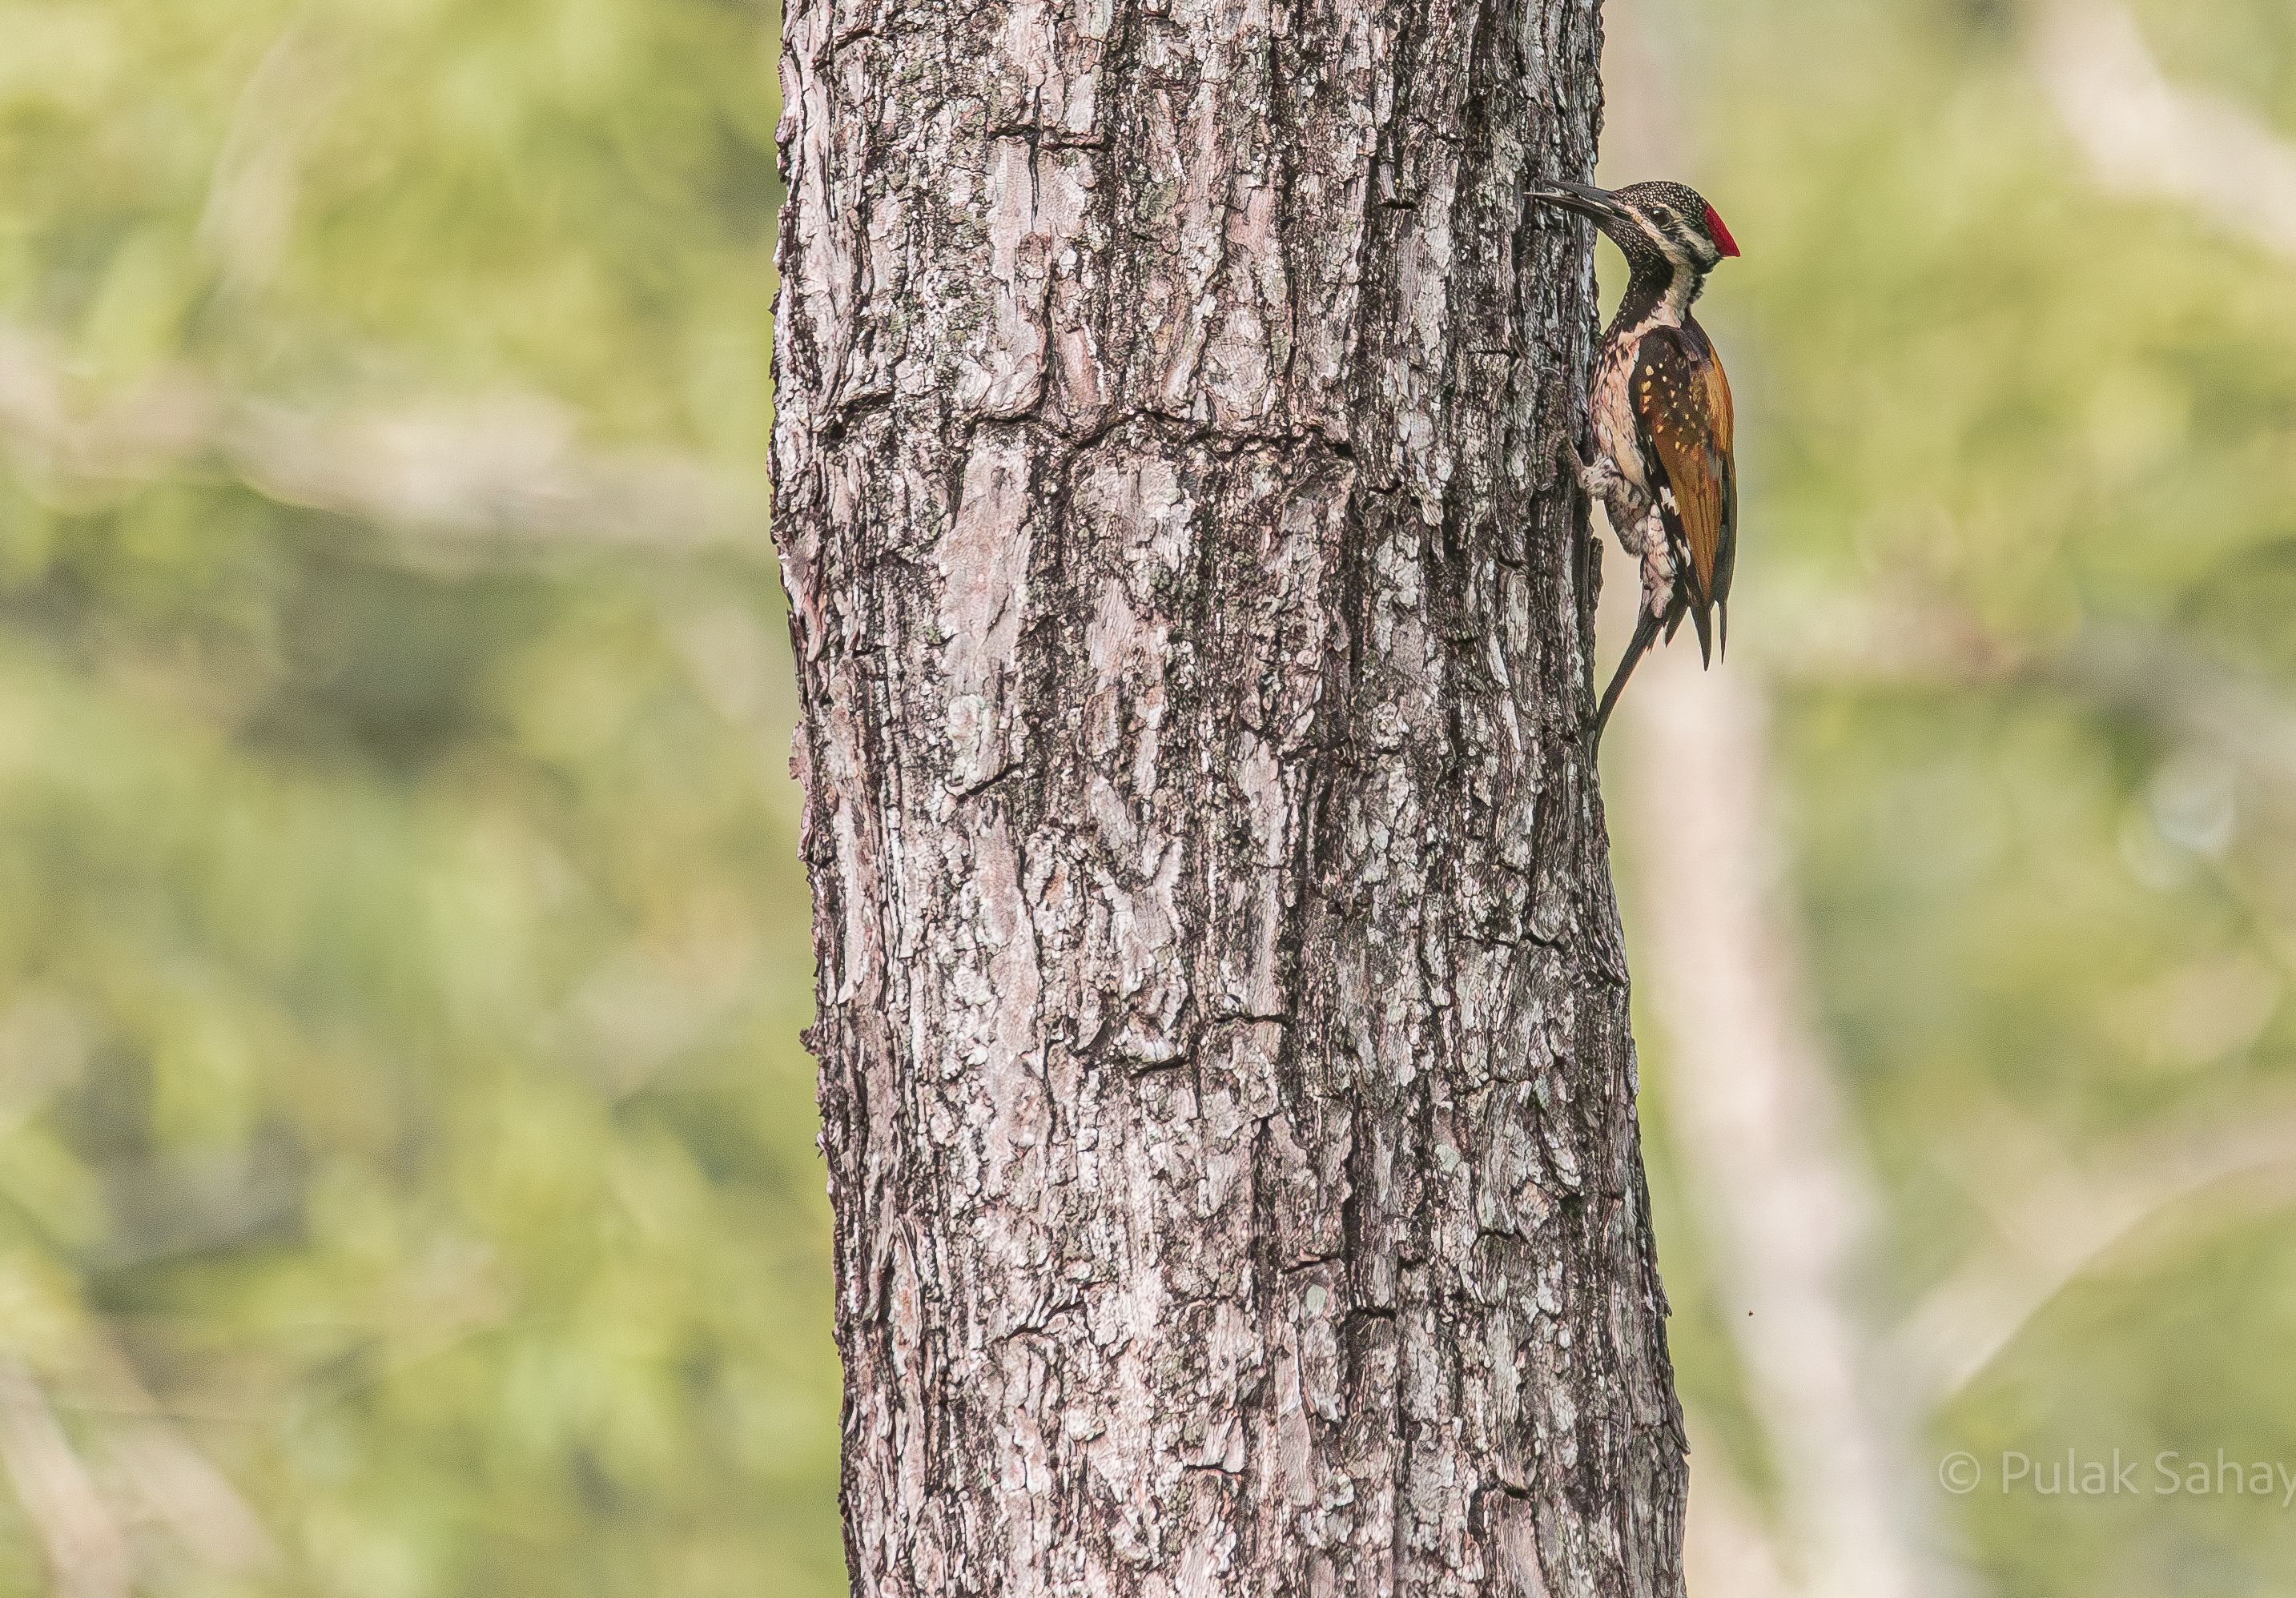 Woodpecker ready to peck